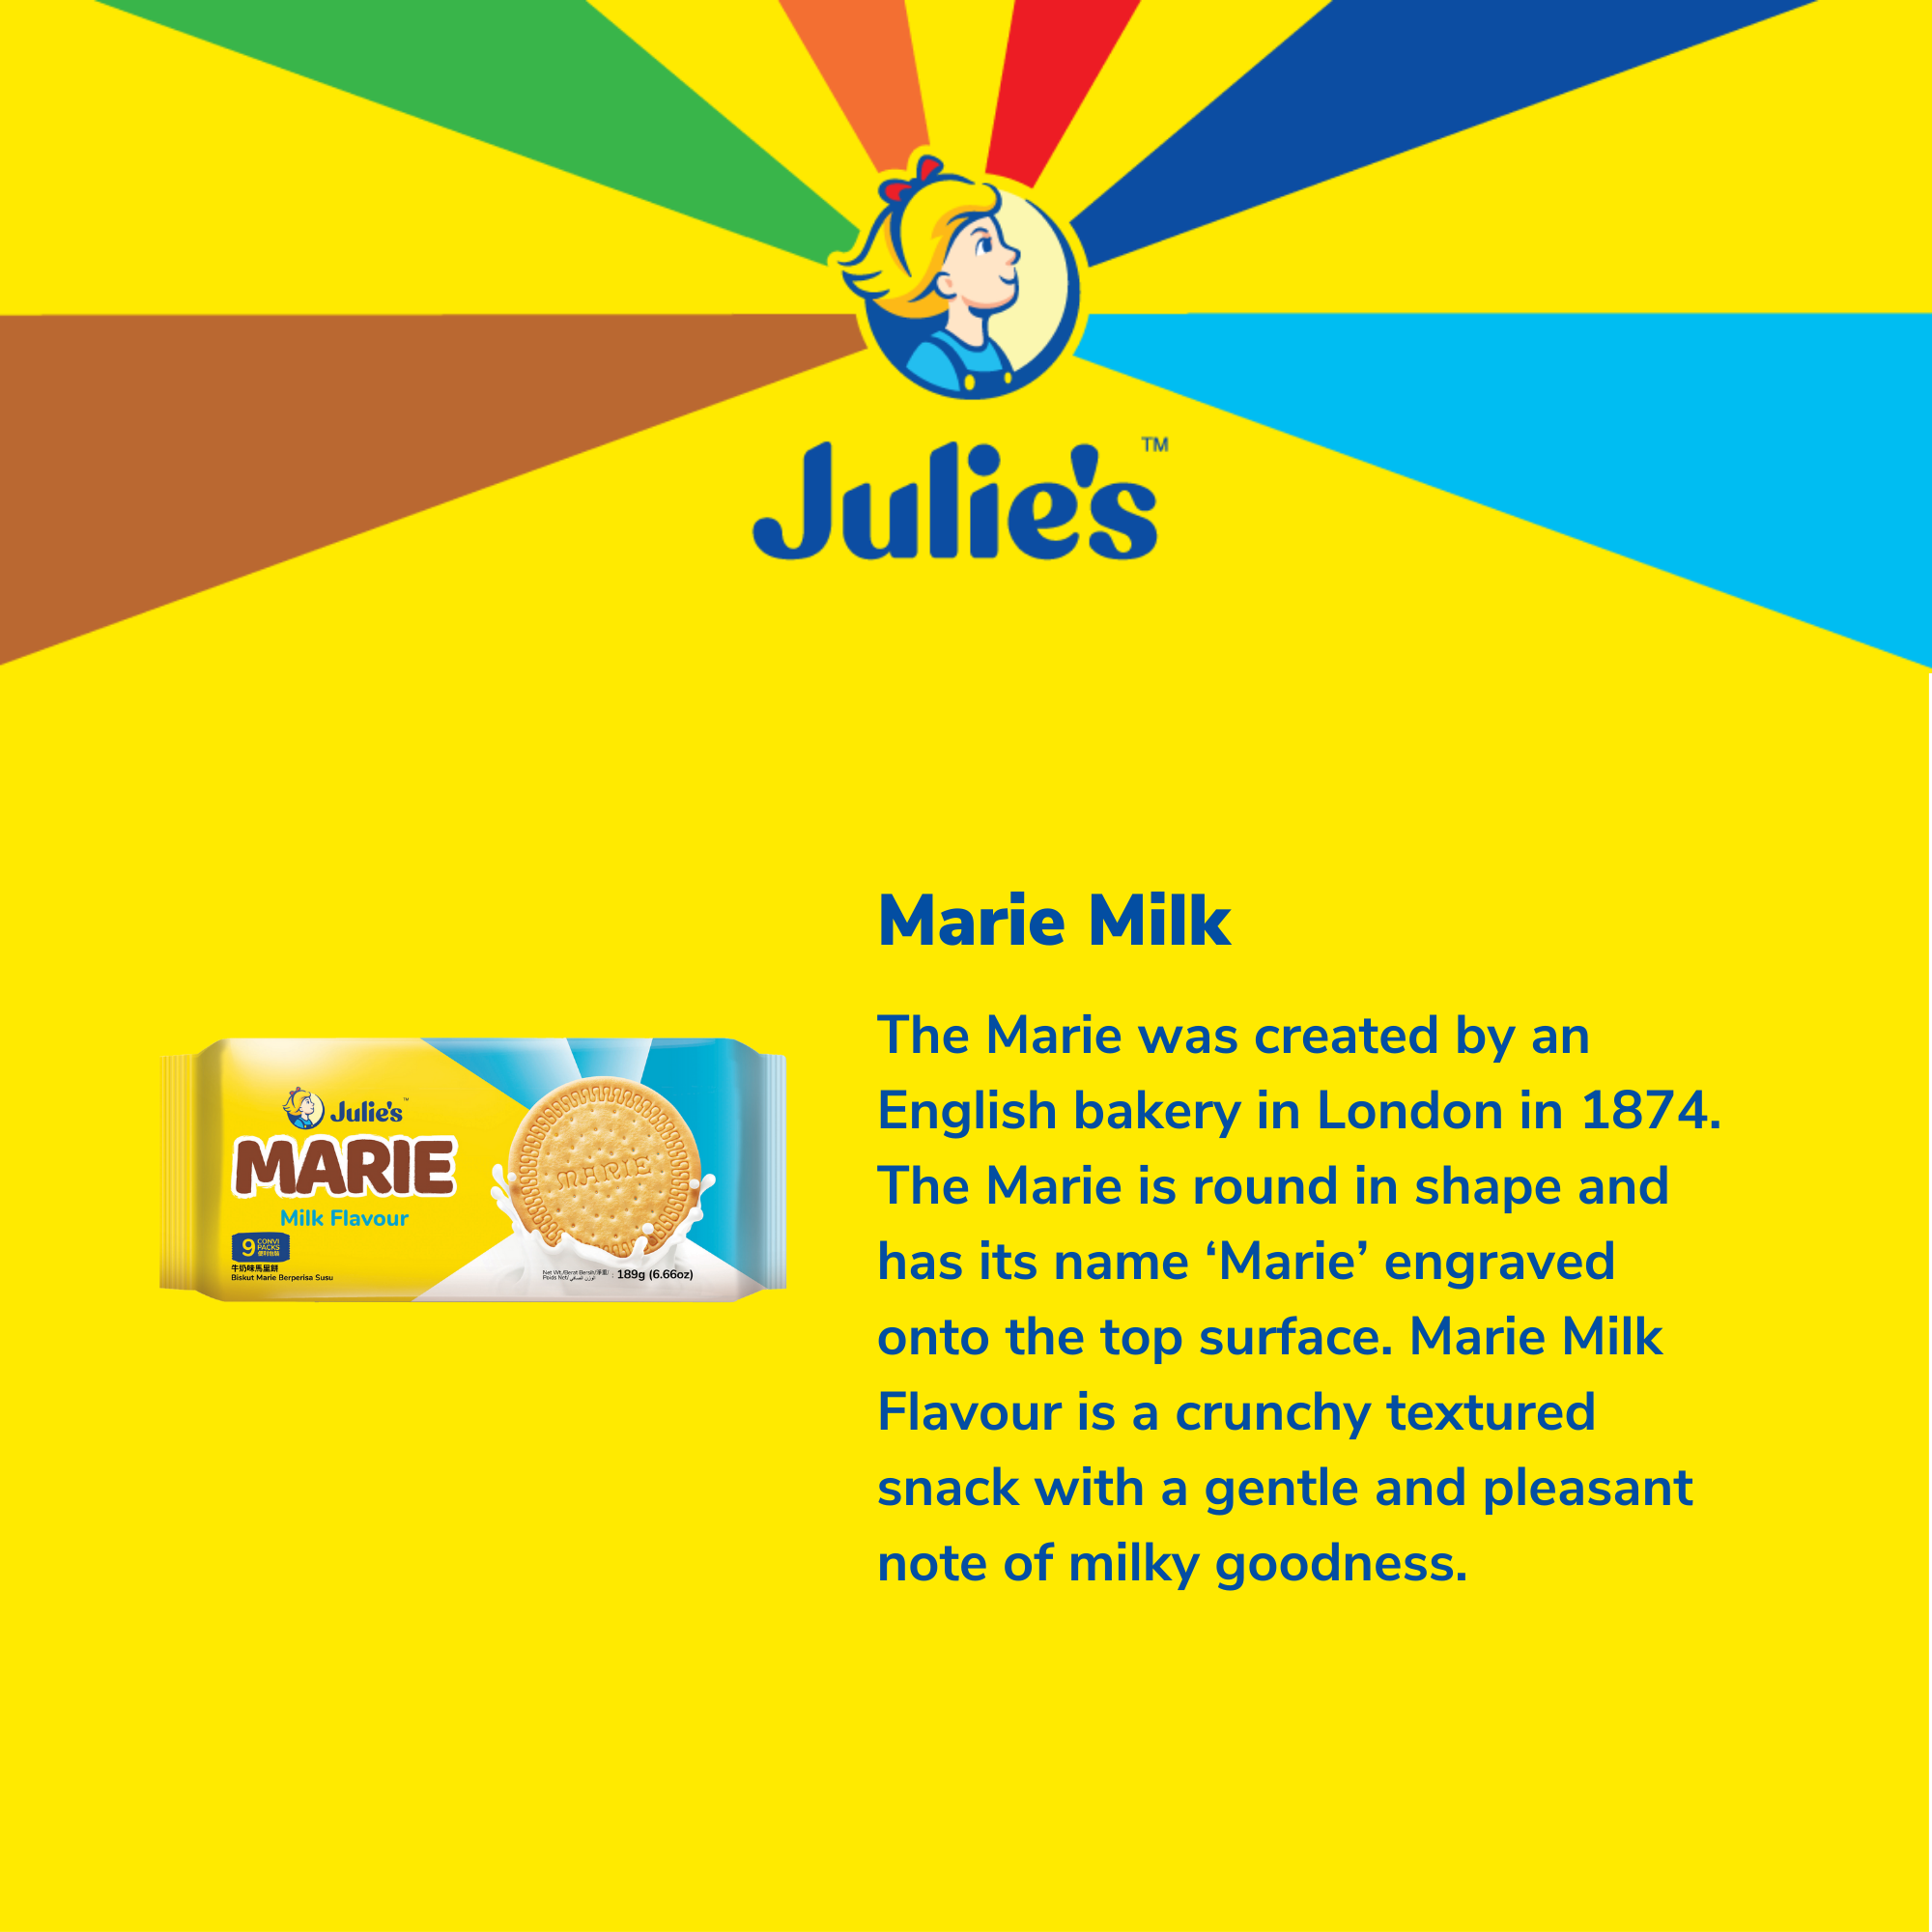 Julie's Marie Milk 189g x 2 packs